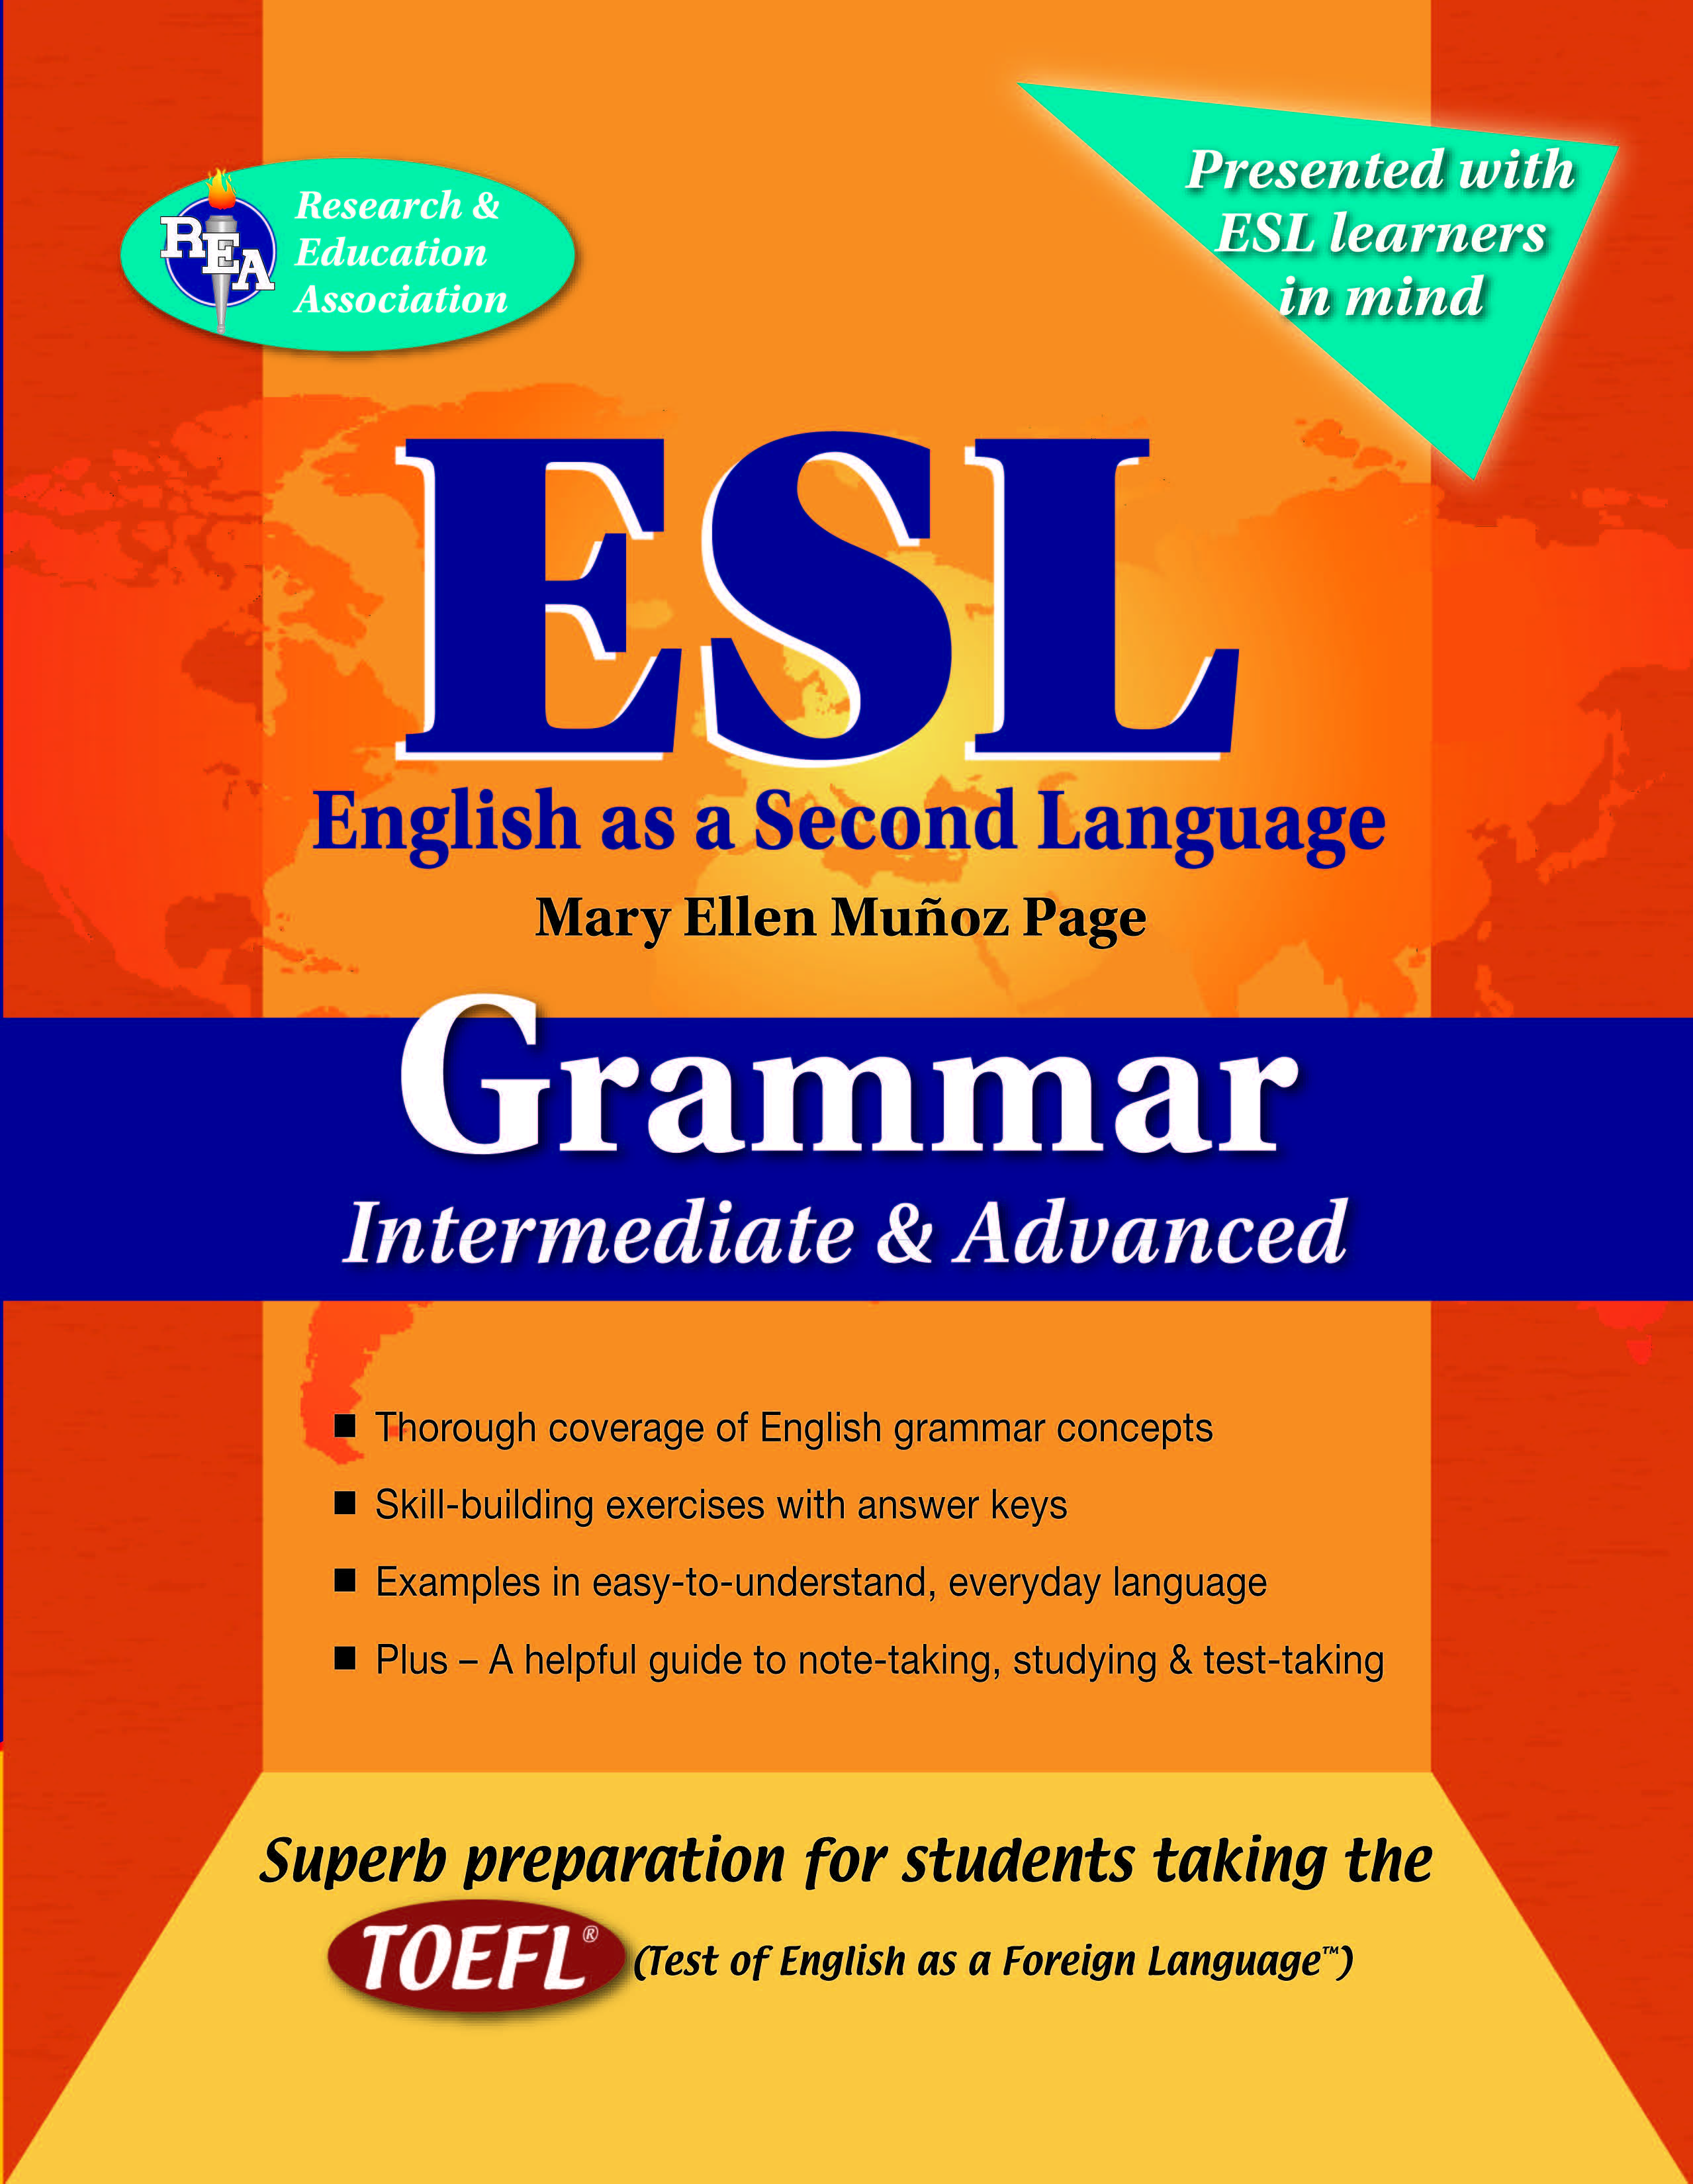 pdf-esl-intermediate-advanced-grammar-by-mary-ellen-munoz-page-steven-michael-gras-perlego